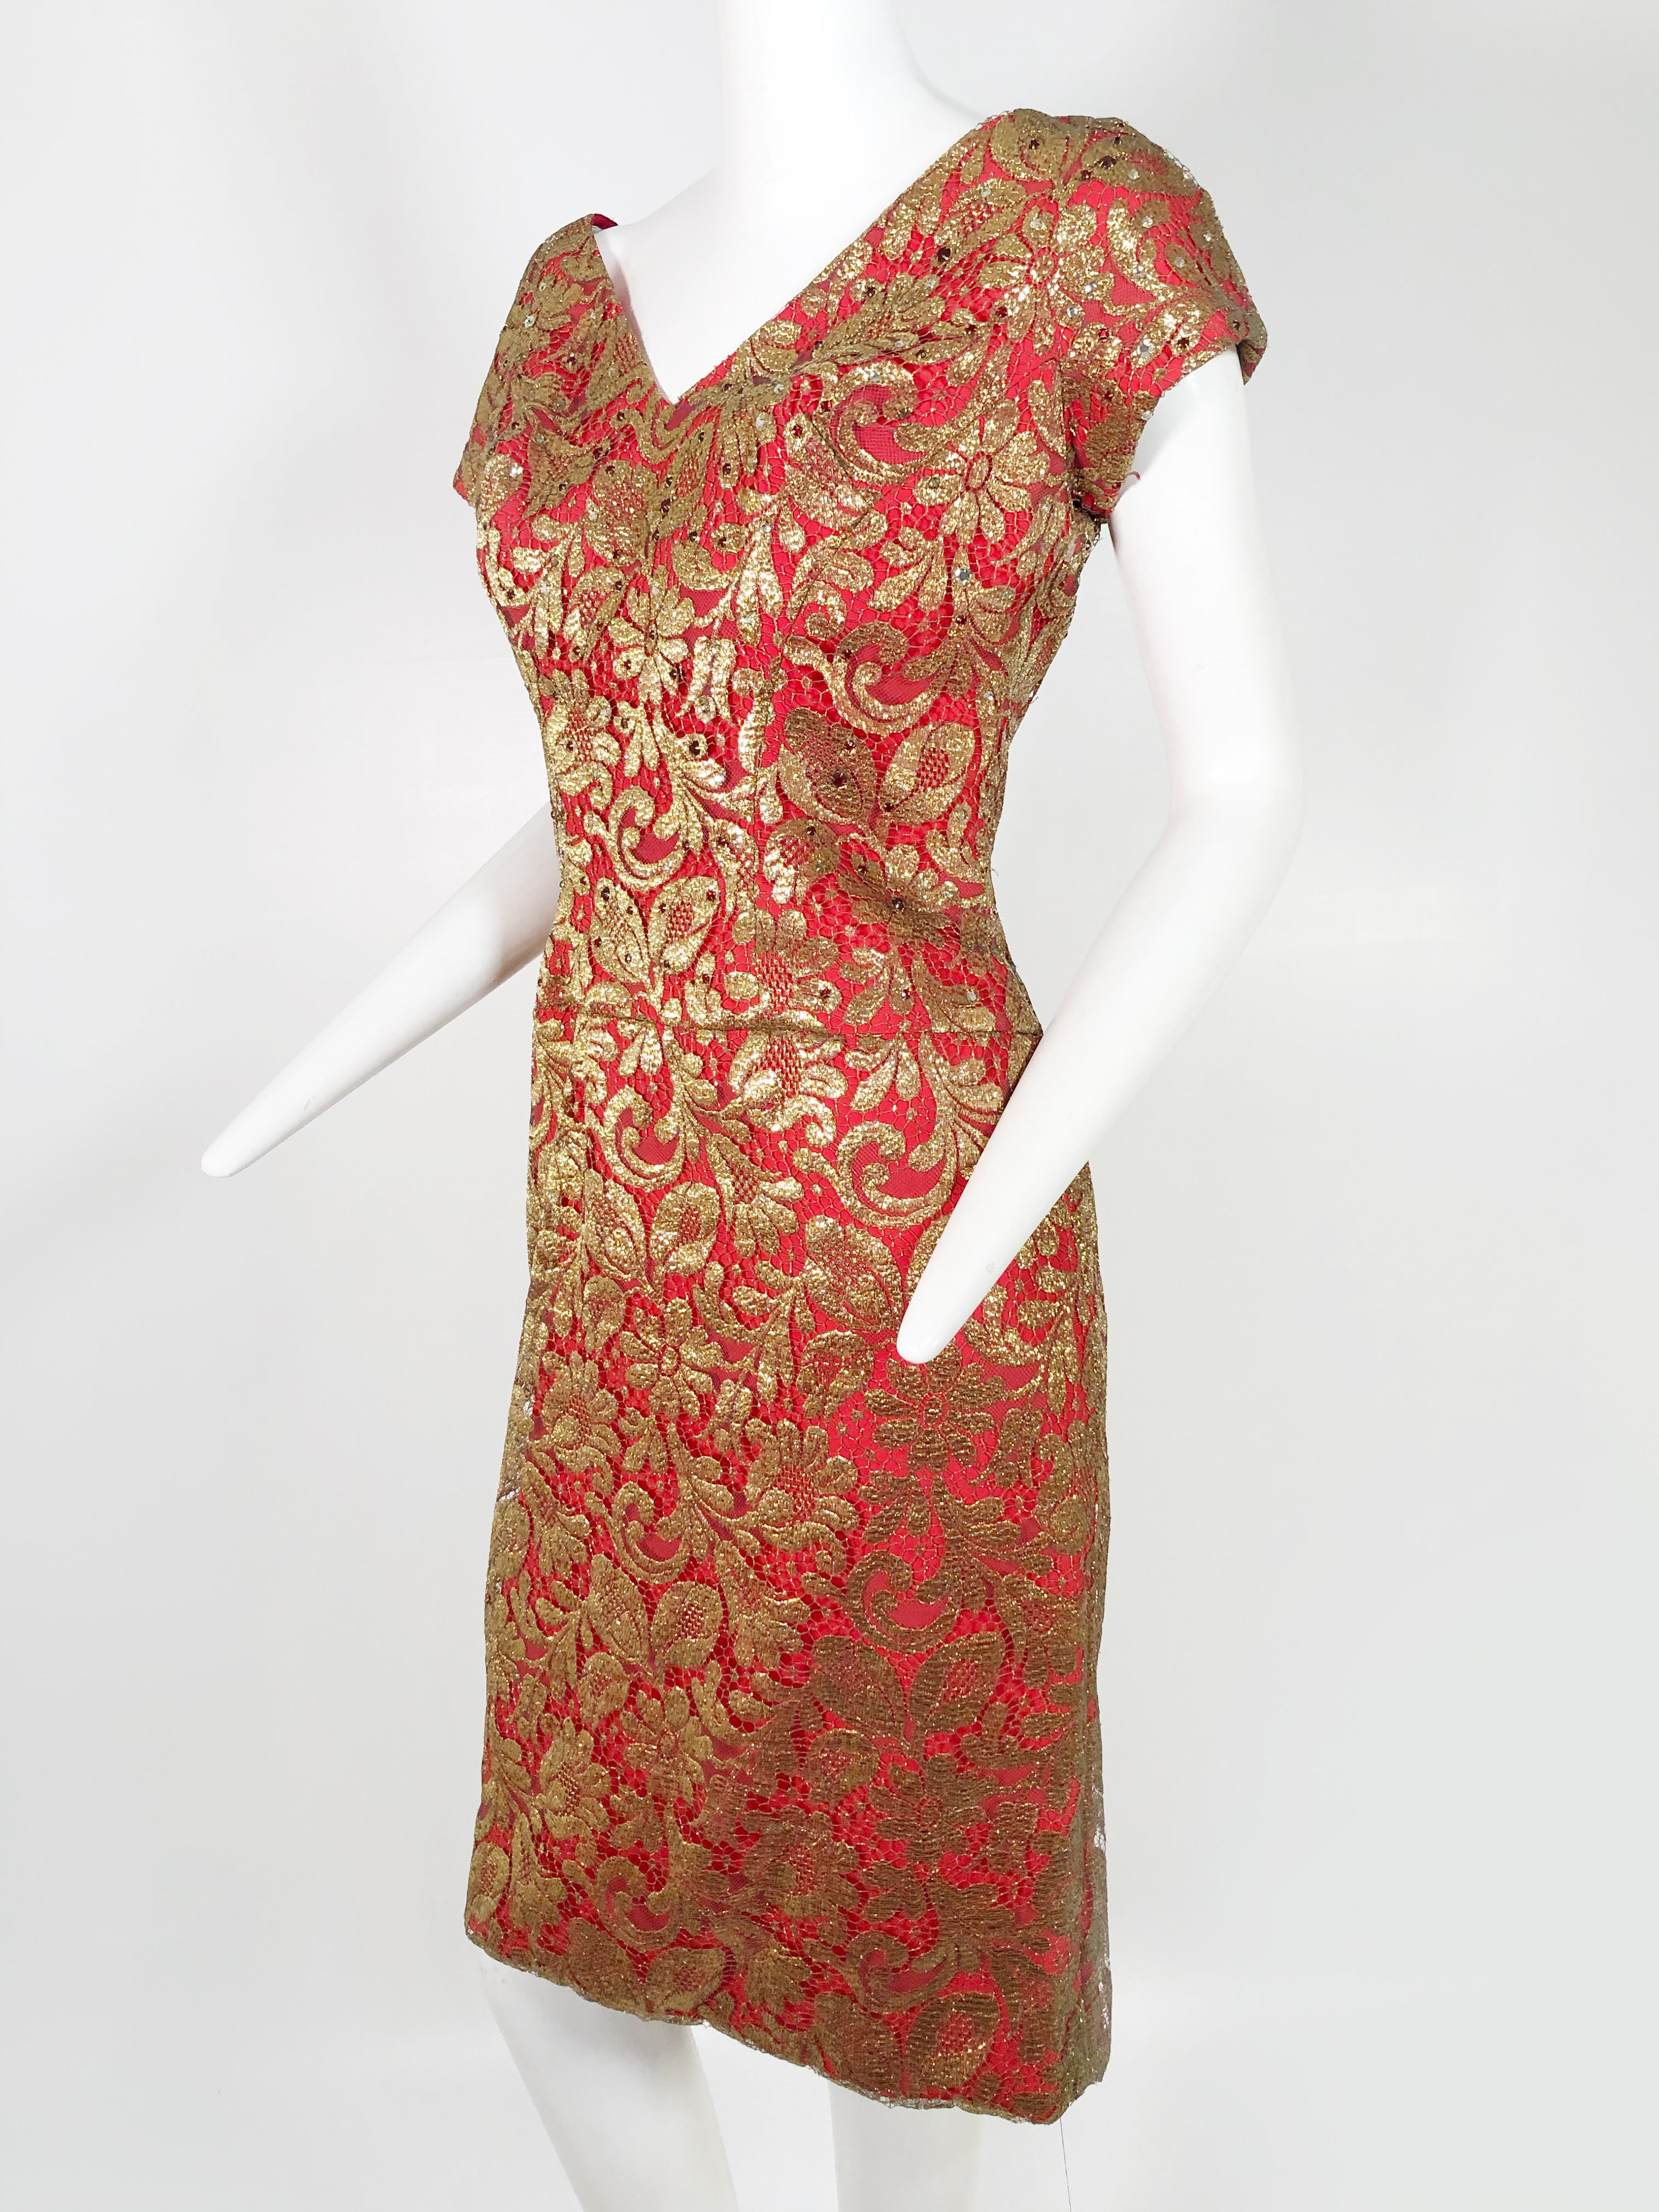 sheath dress 1950s